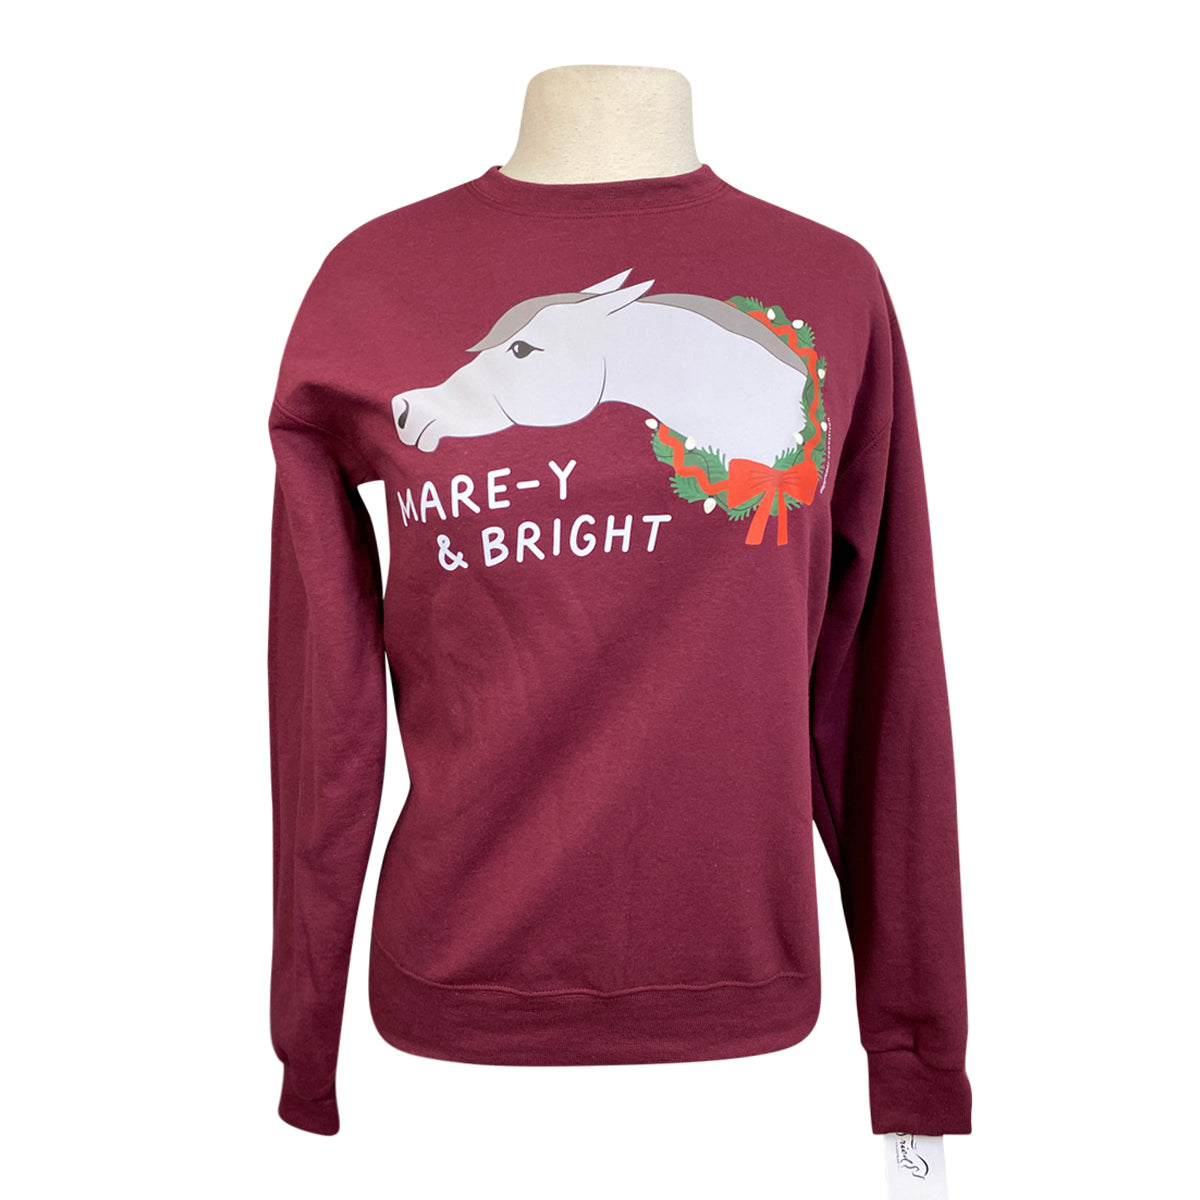 Dapplebay 'Mare-y & Bright' Sweatshirt in Mulled Wine/Grey